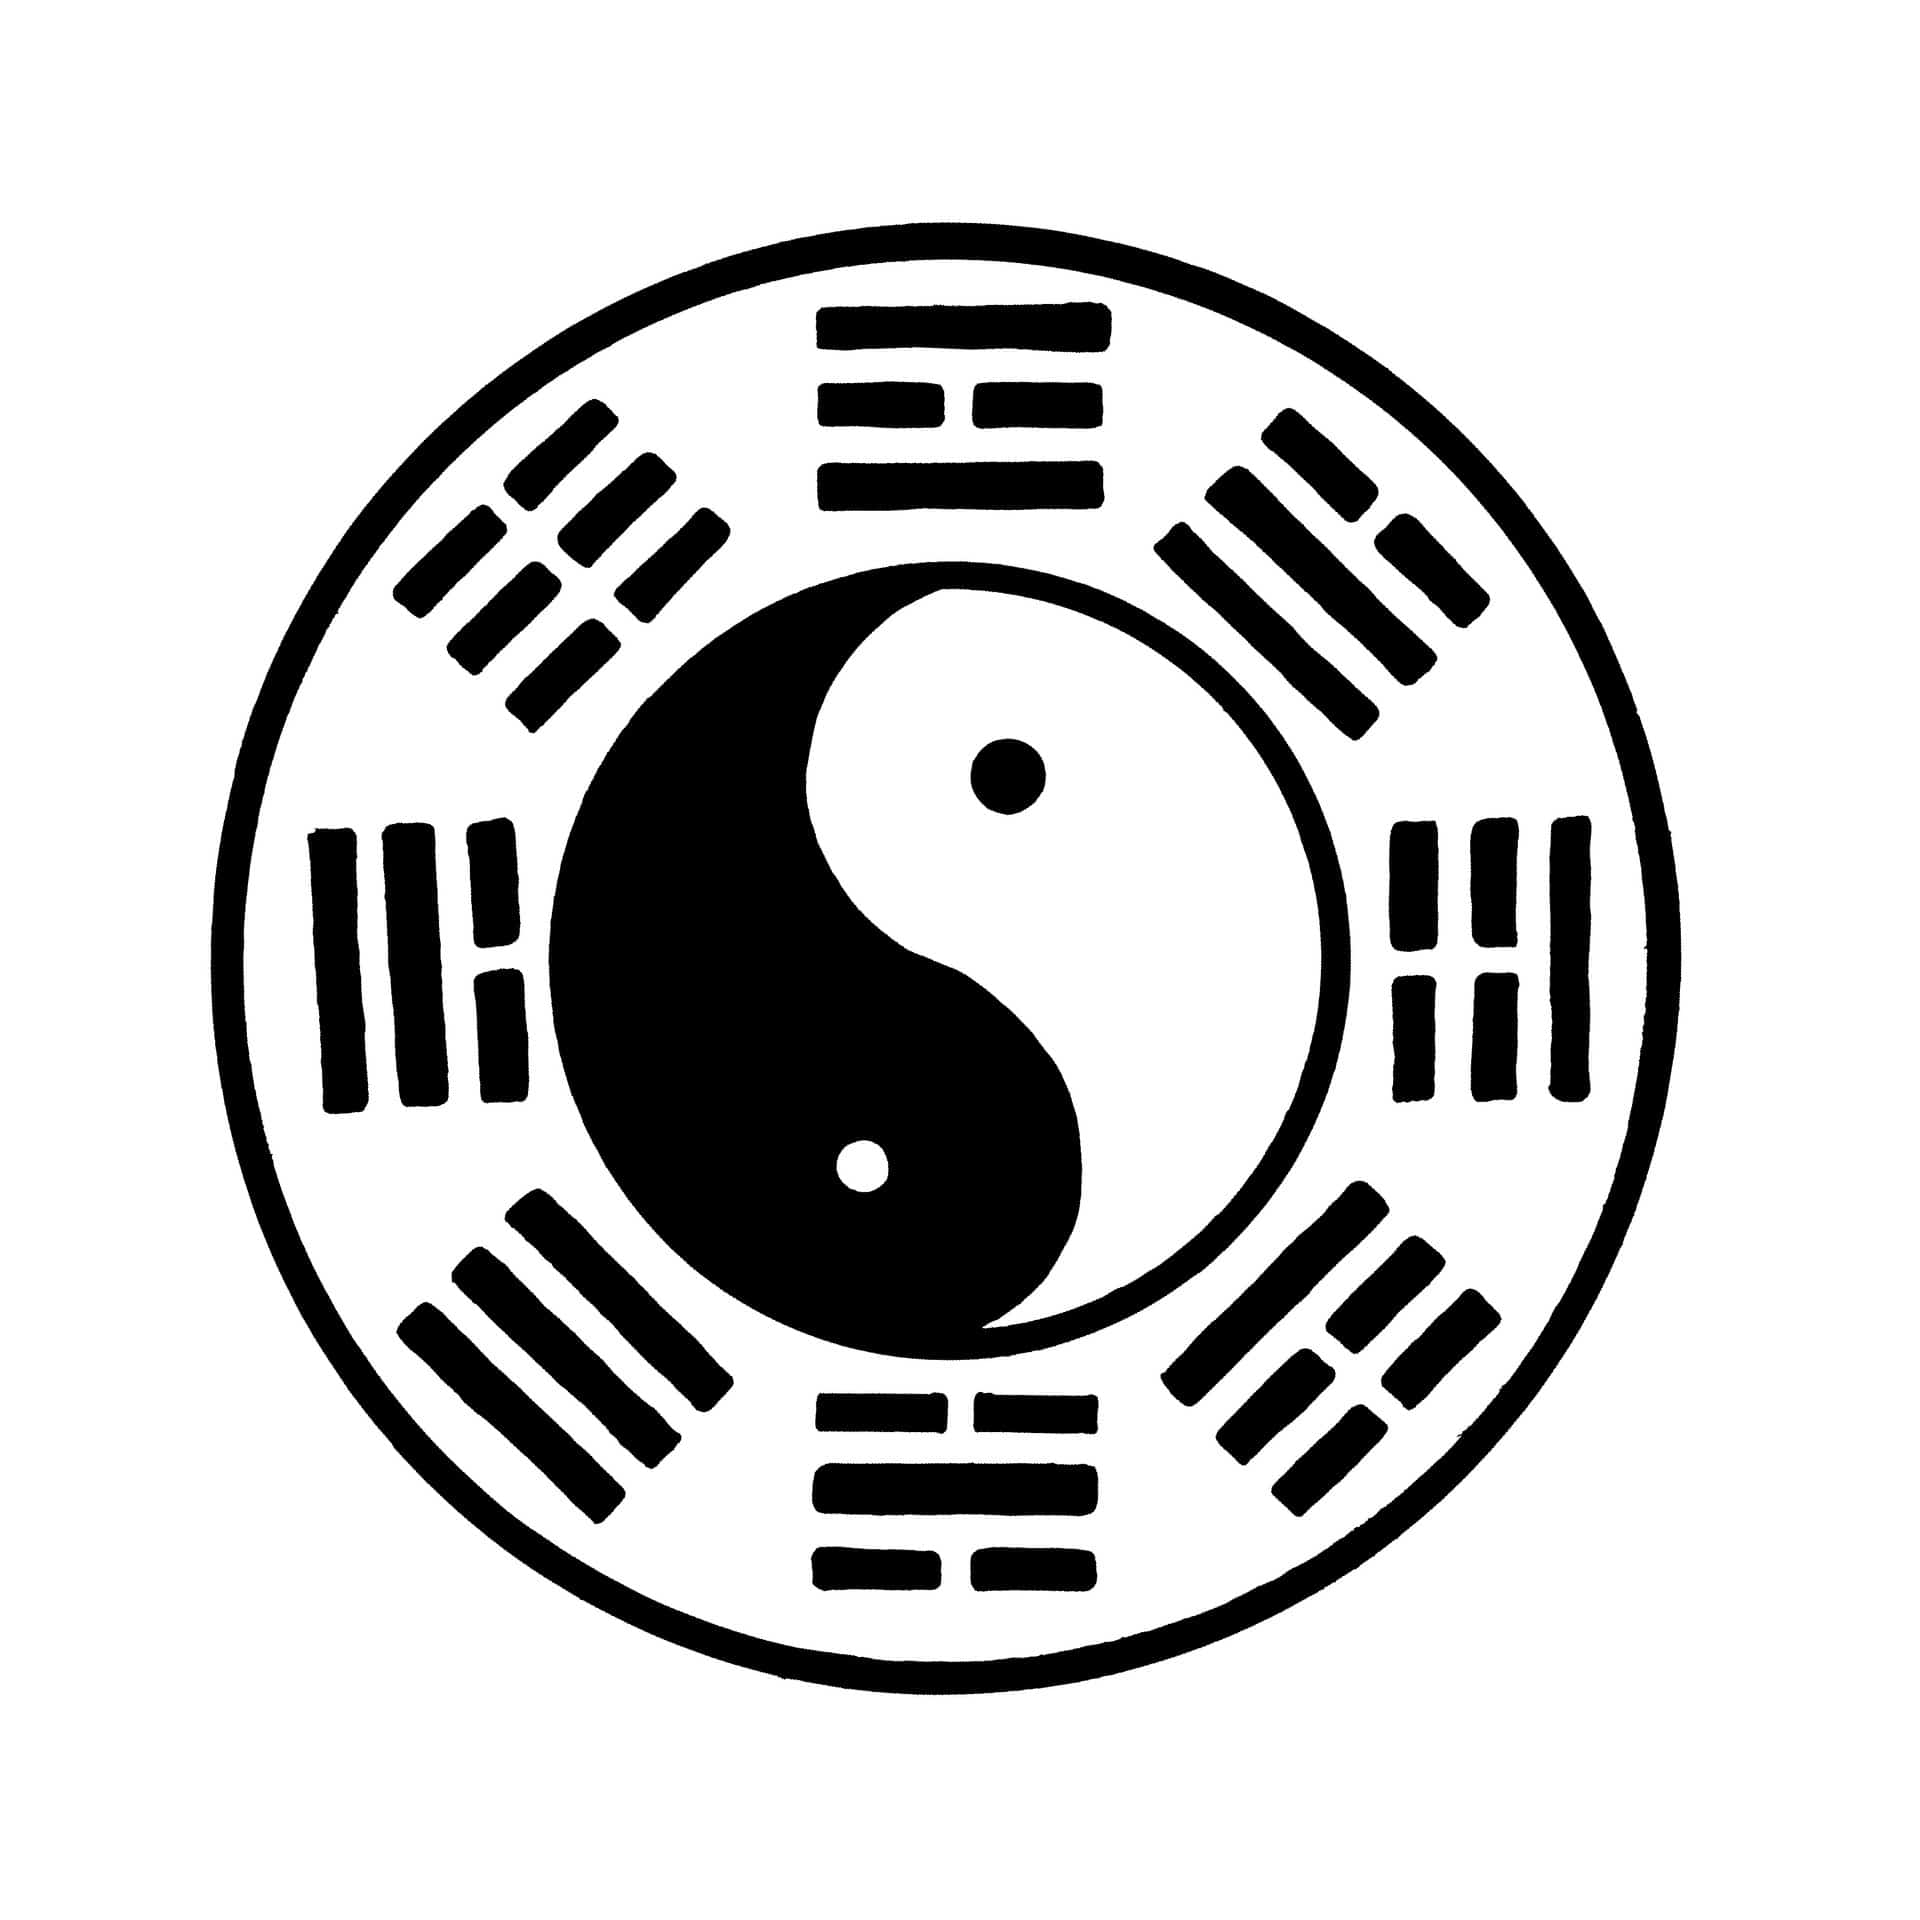 Yin Yang Flag – Lama Foundation